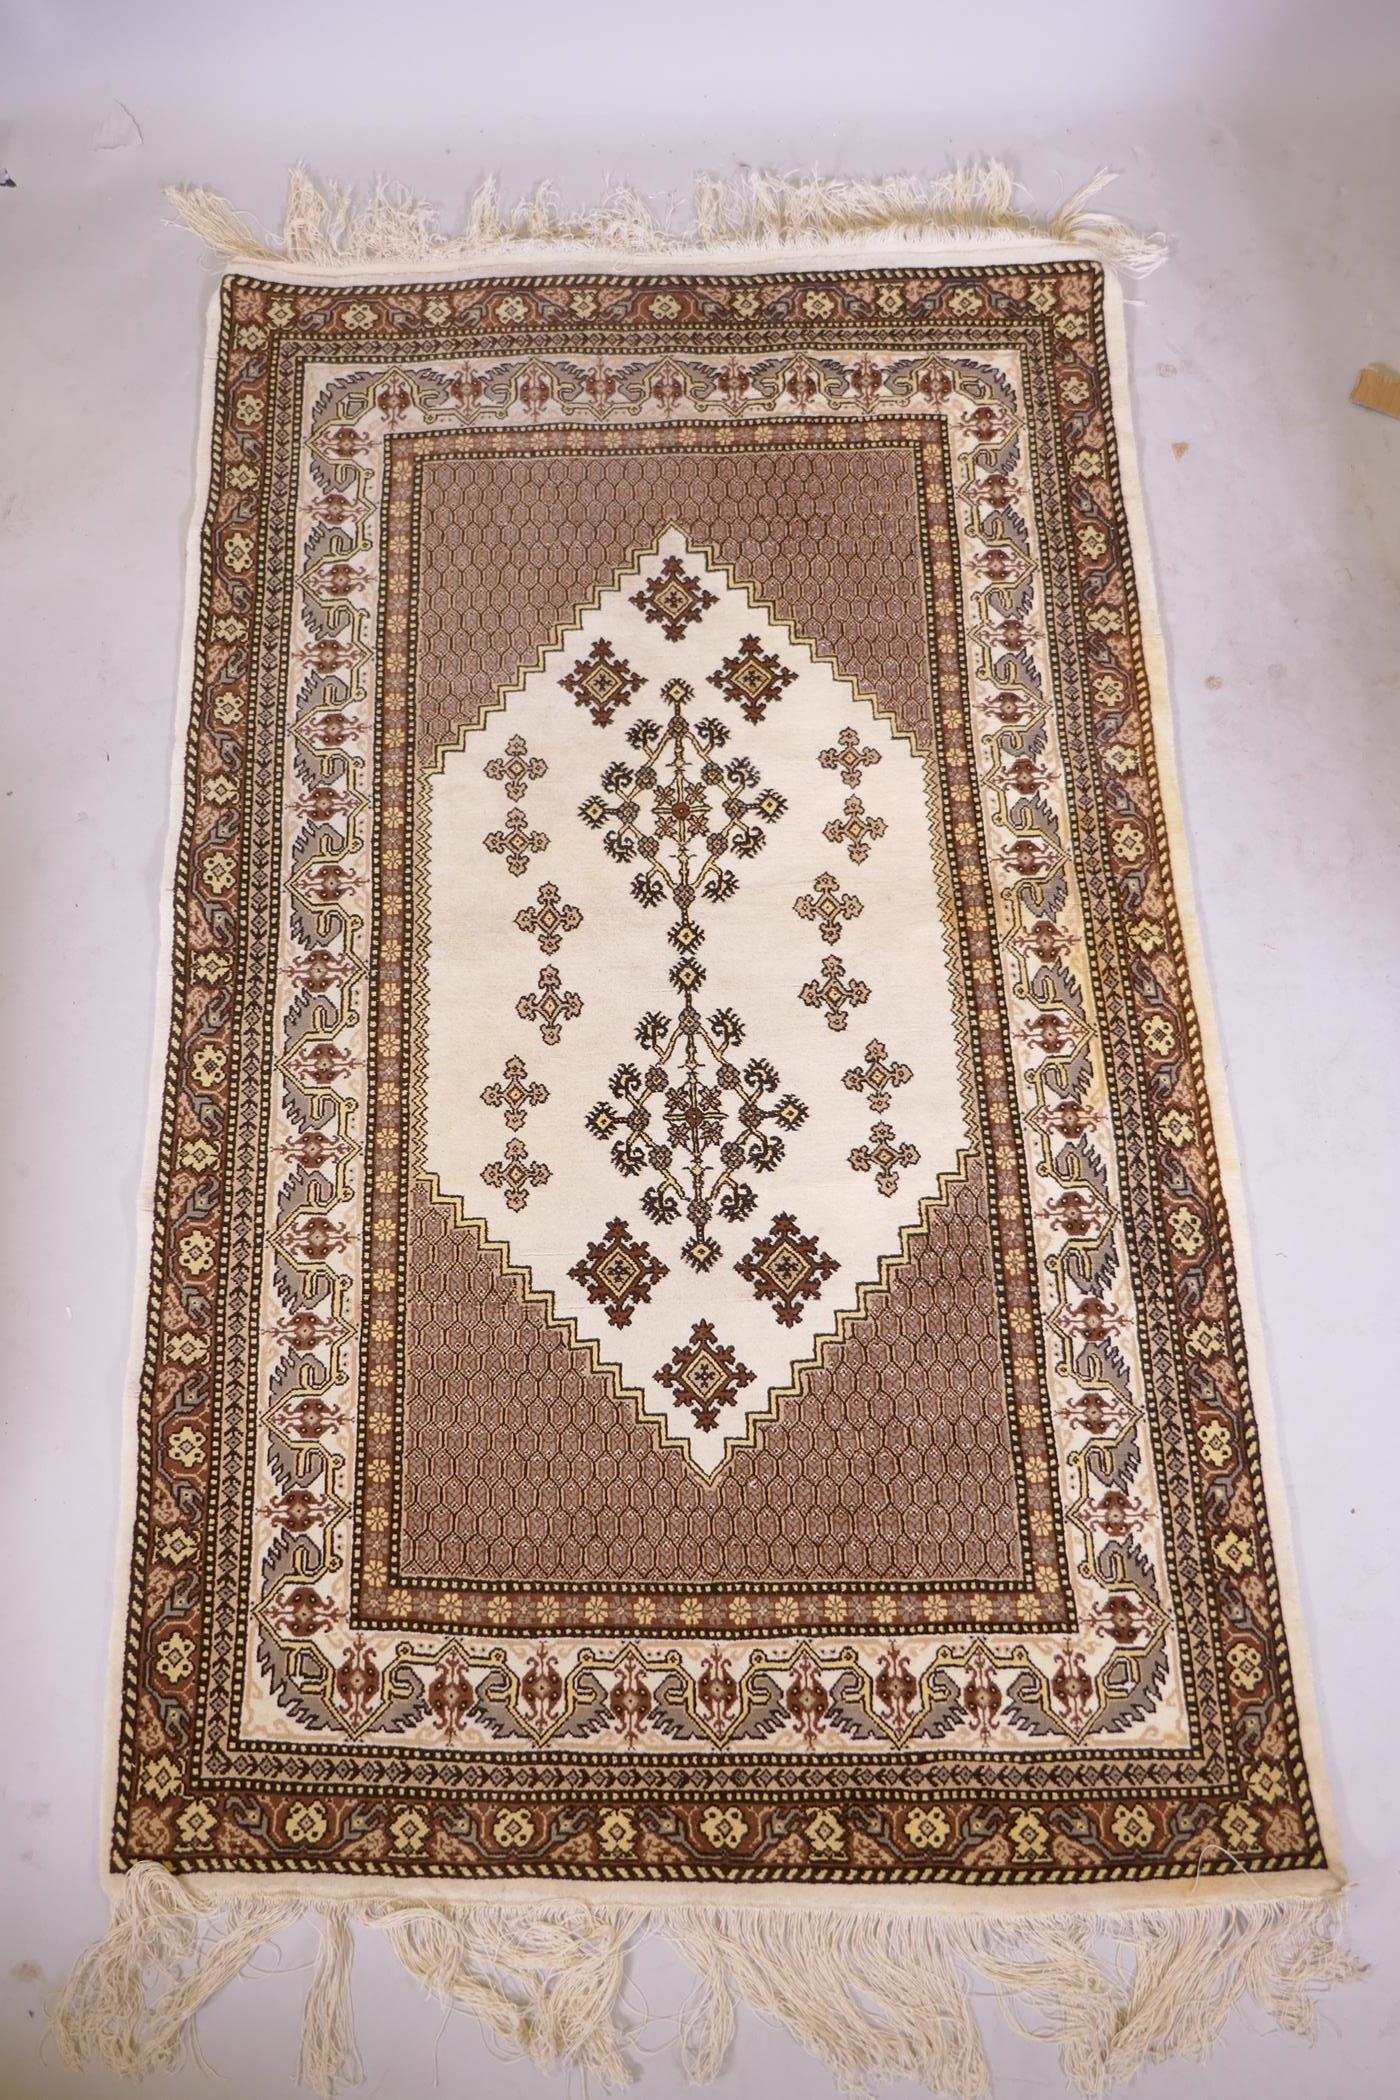 A Tunisian cream ground geometric rug with brown borders, 118cm x 190cm